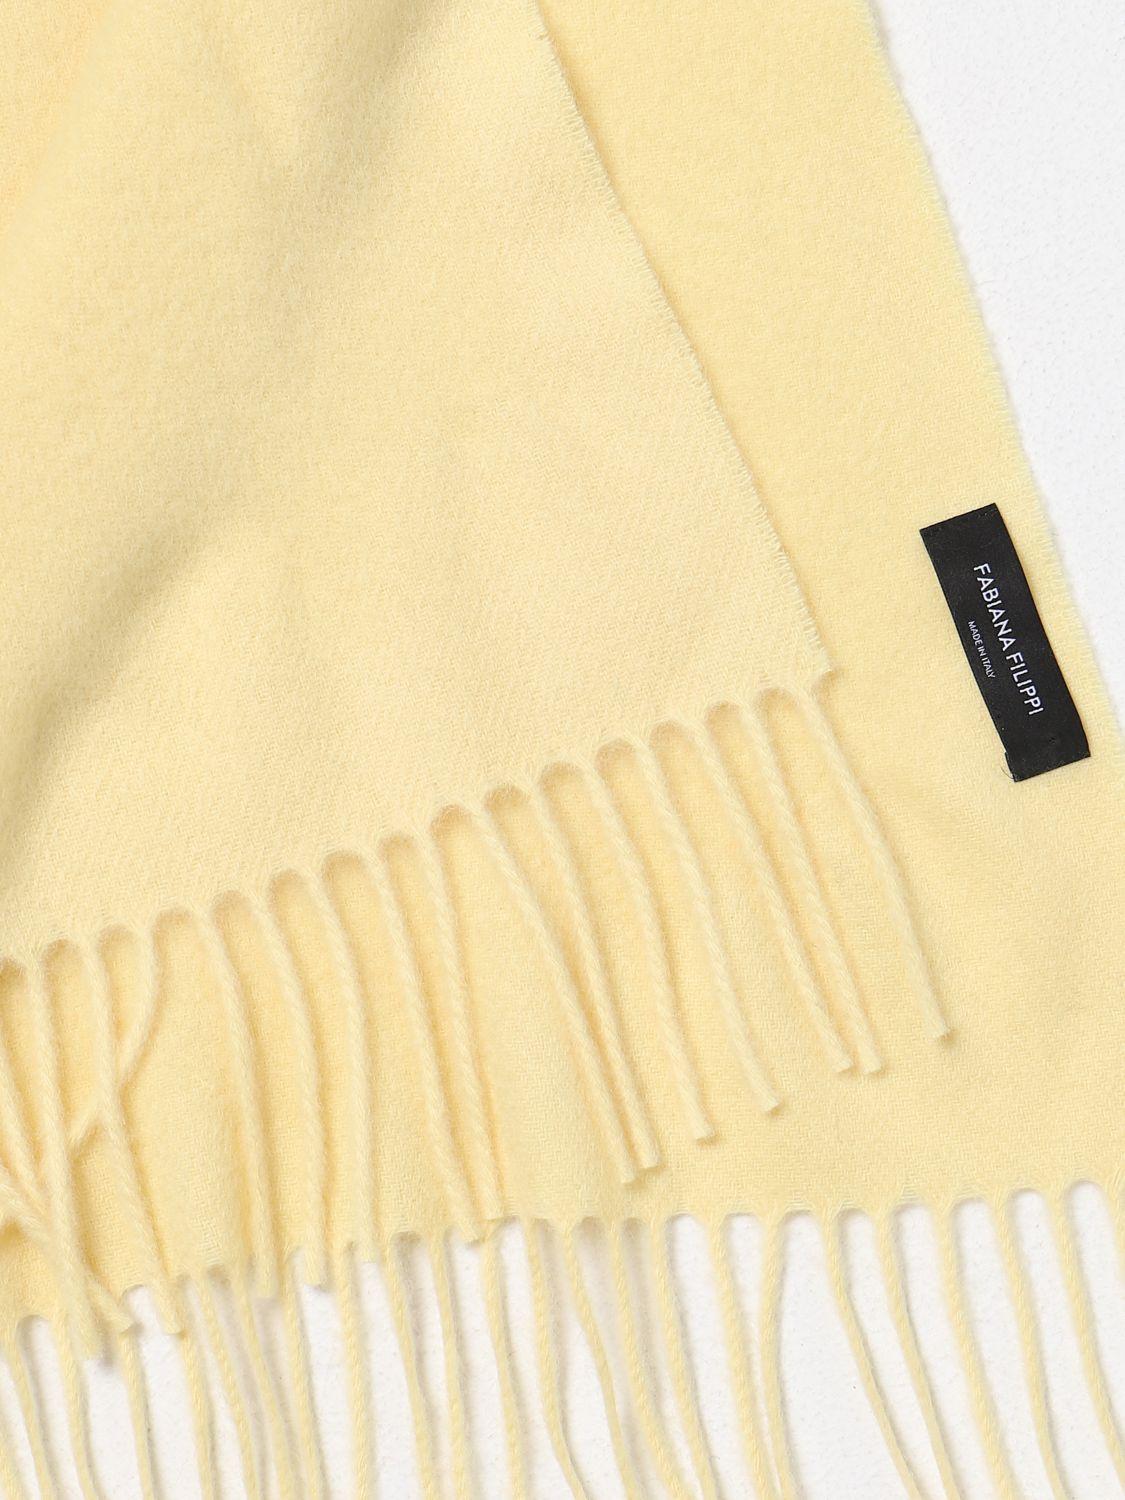 Fabiana Filippi frayed-edge detail scarf - Yellow